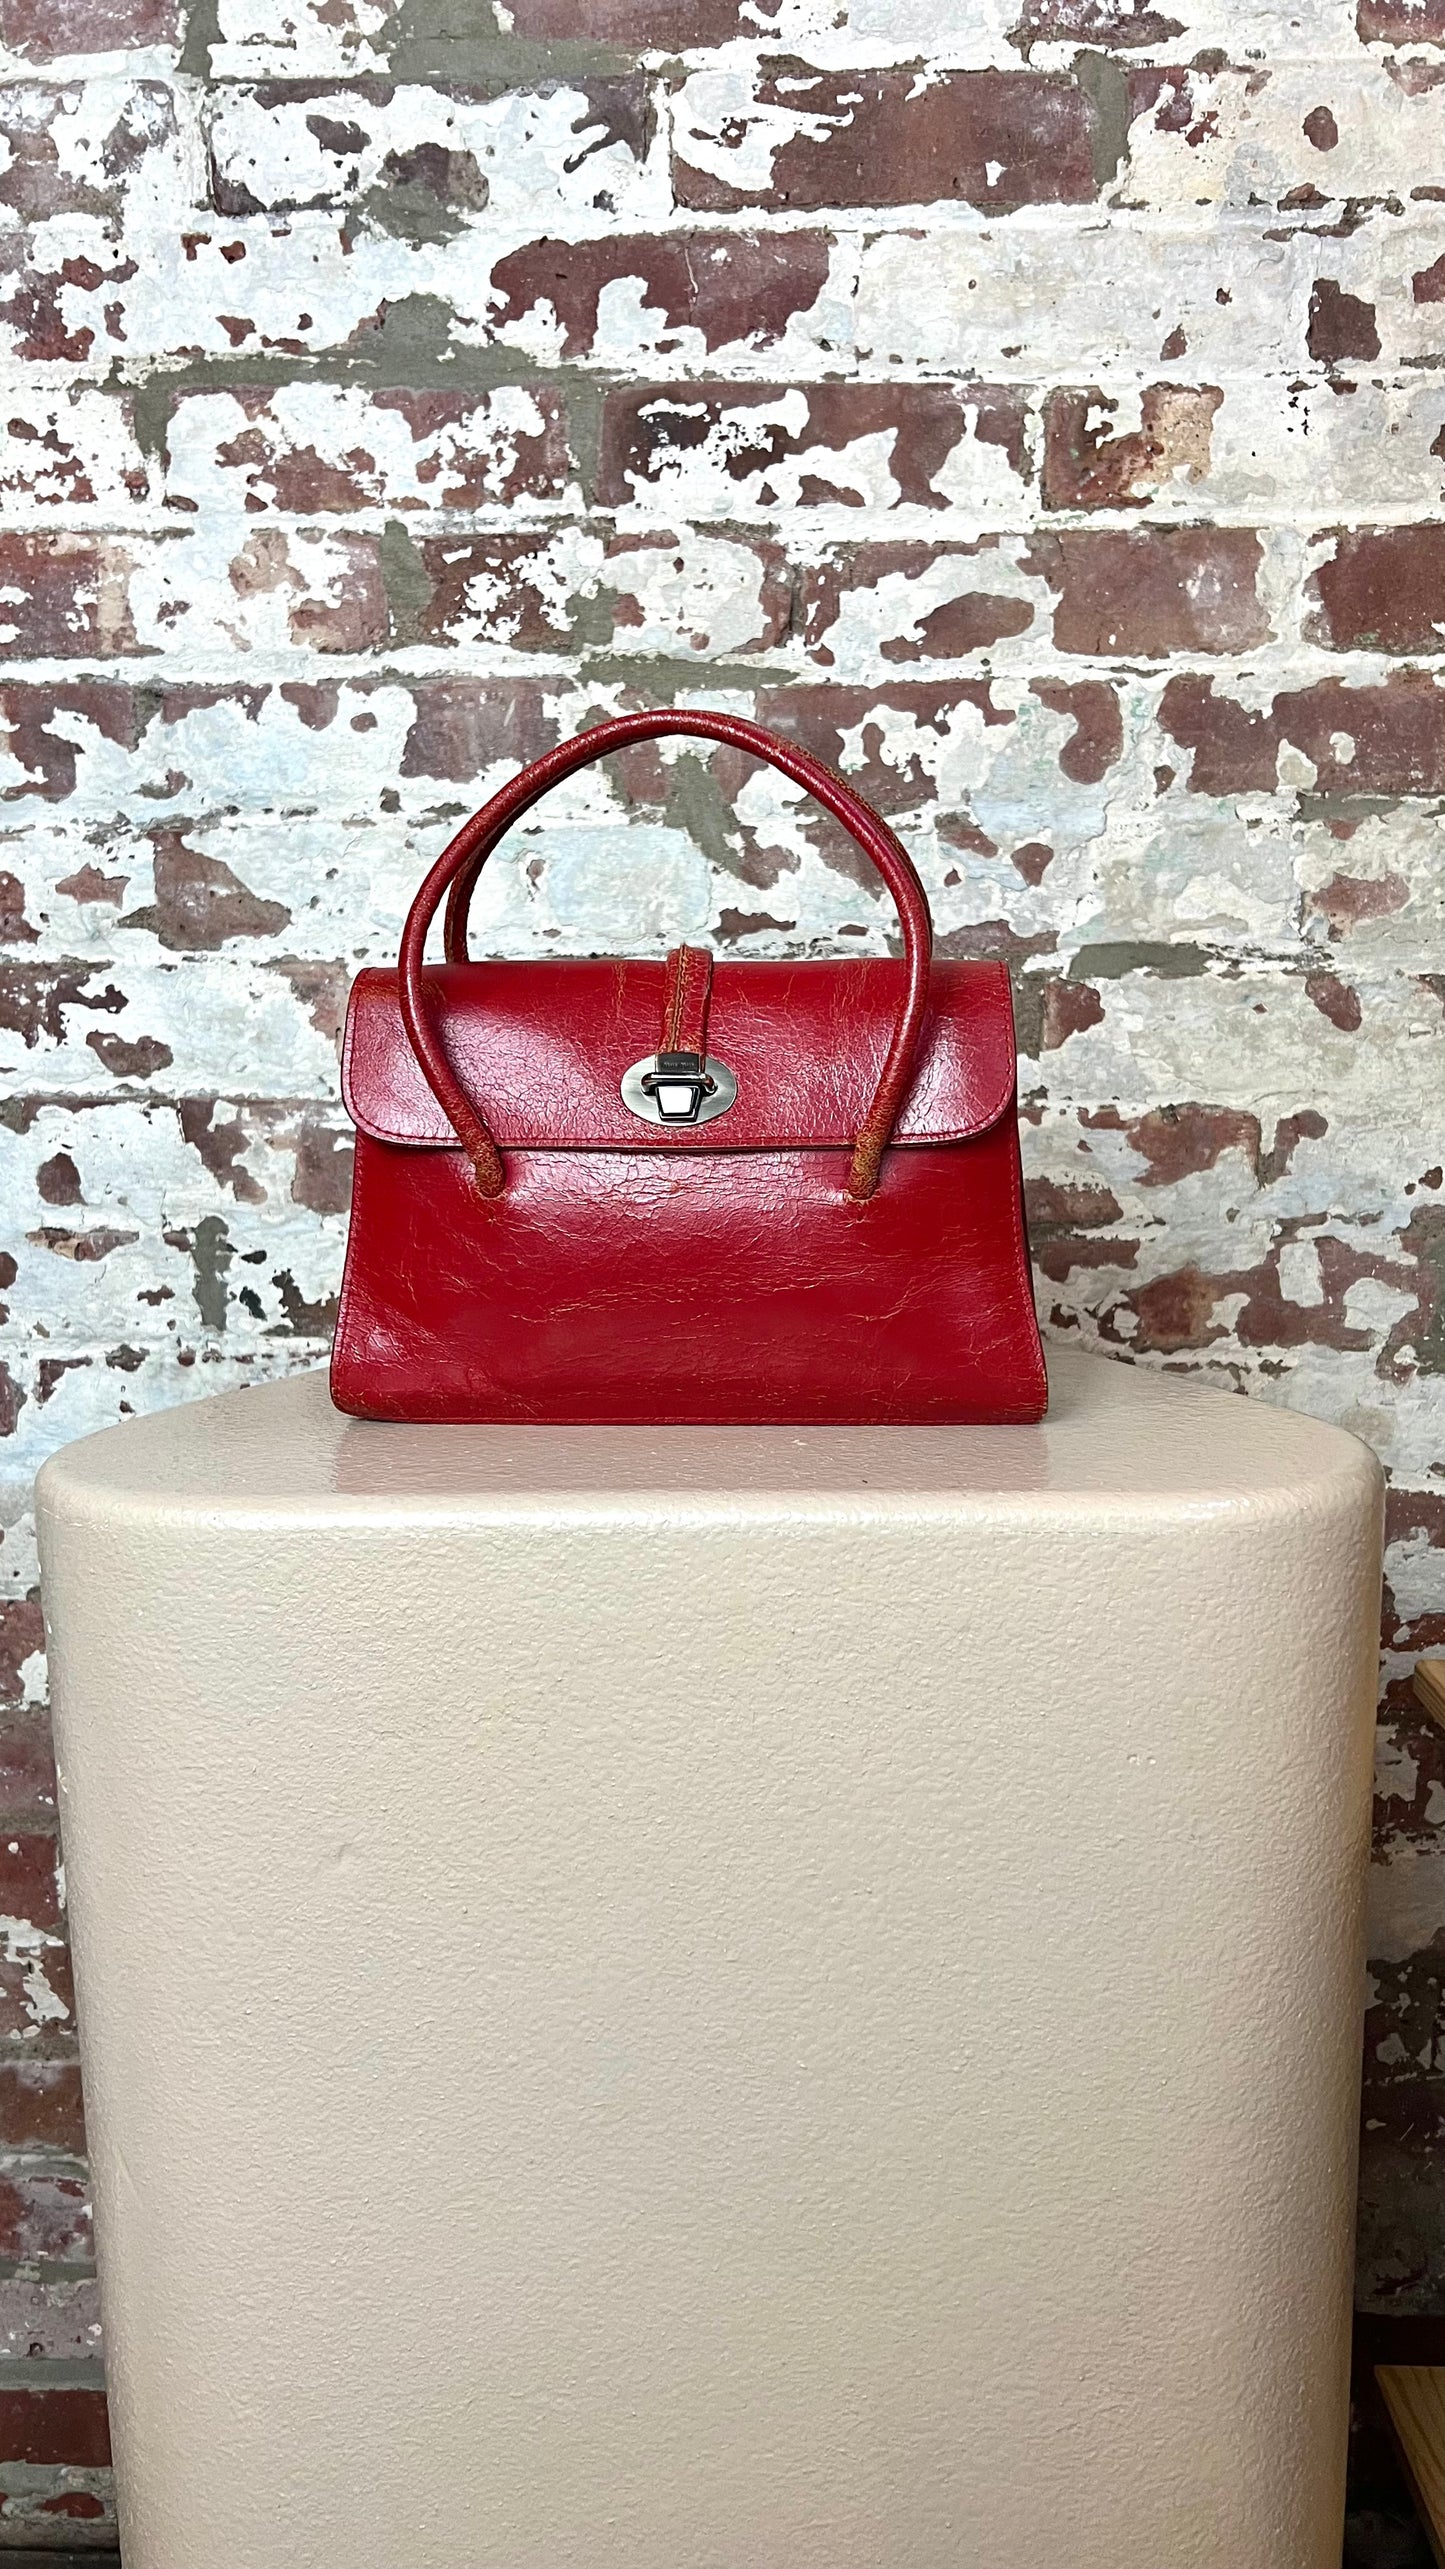 Miu Miu Red Cracked Leather Handbag